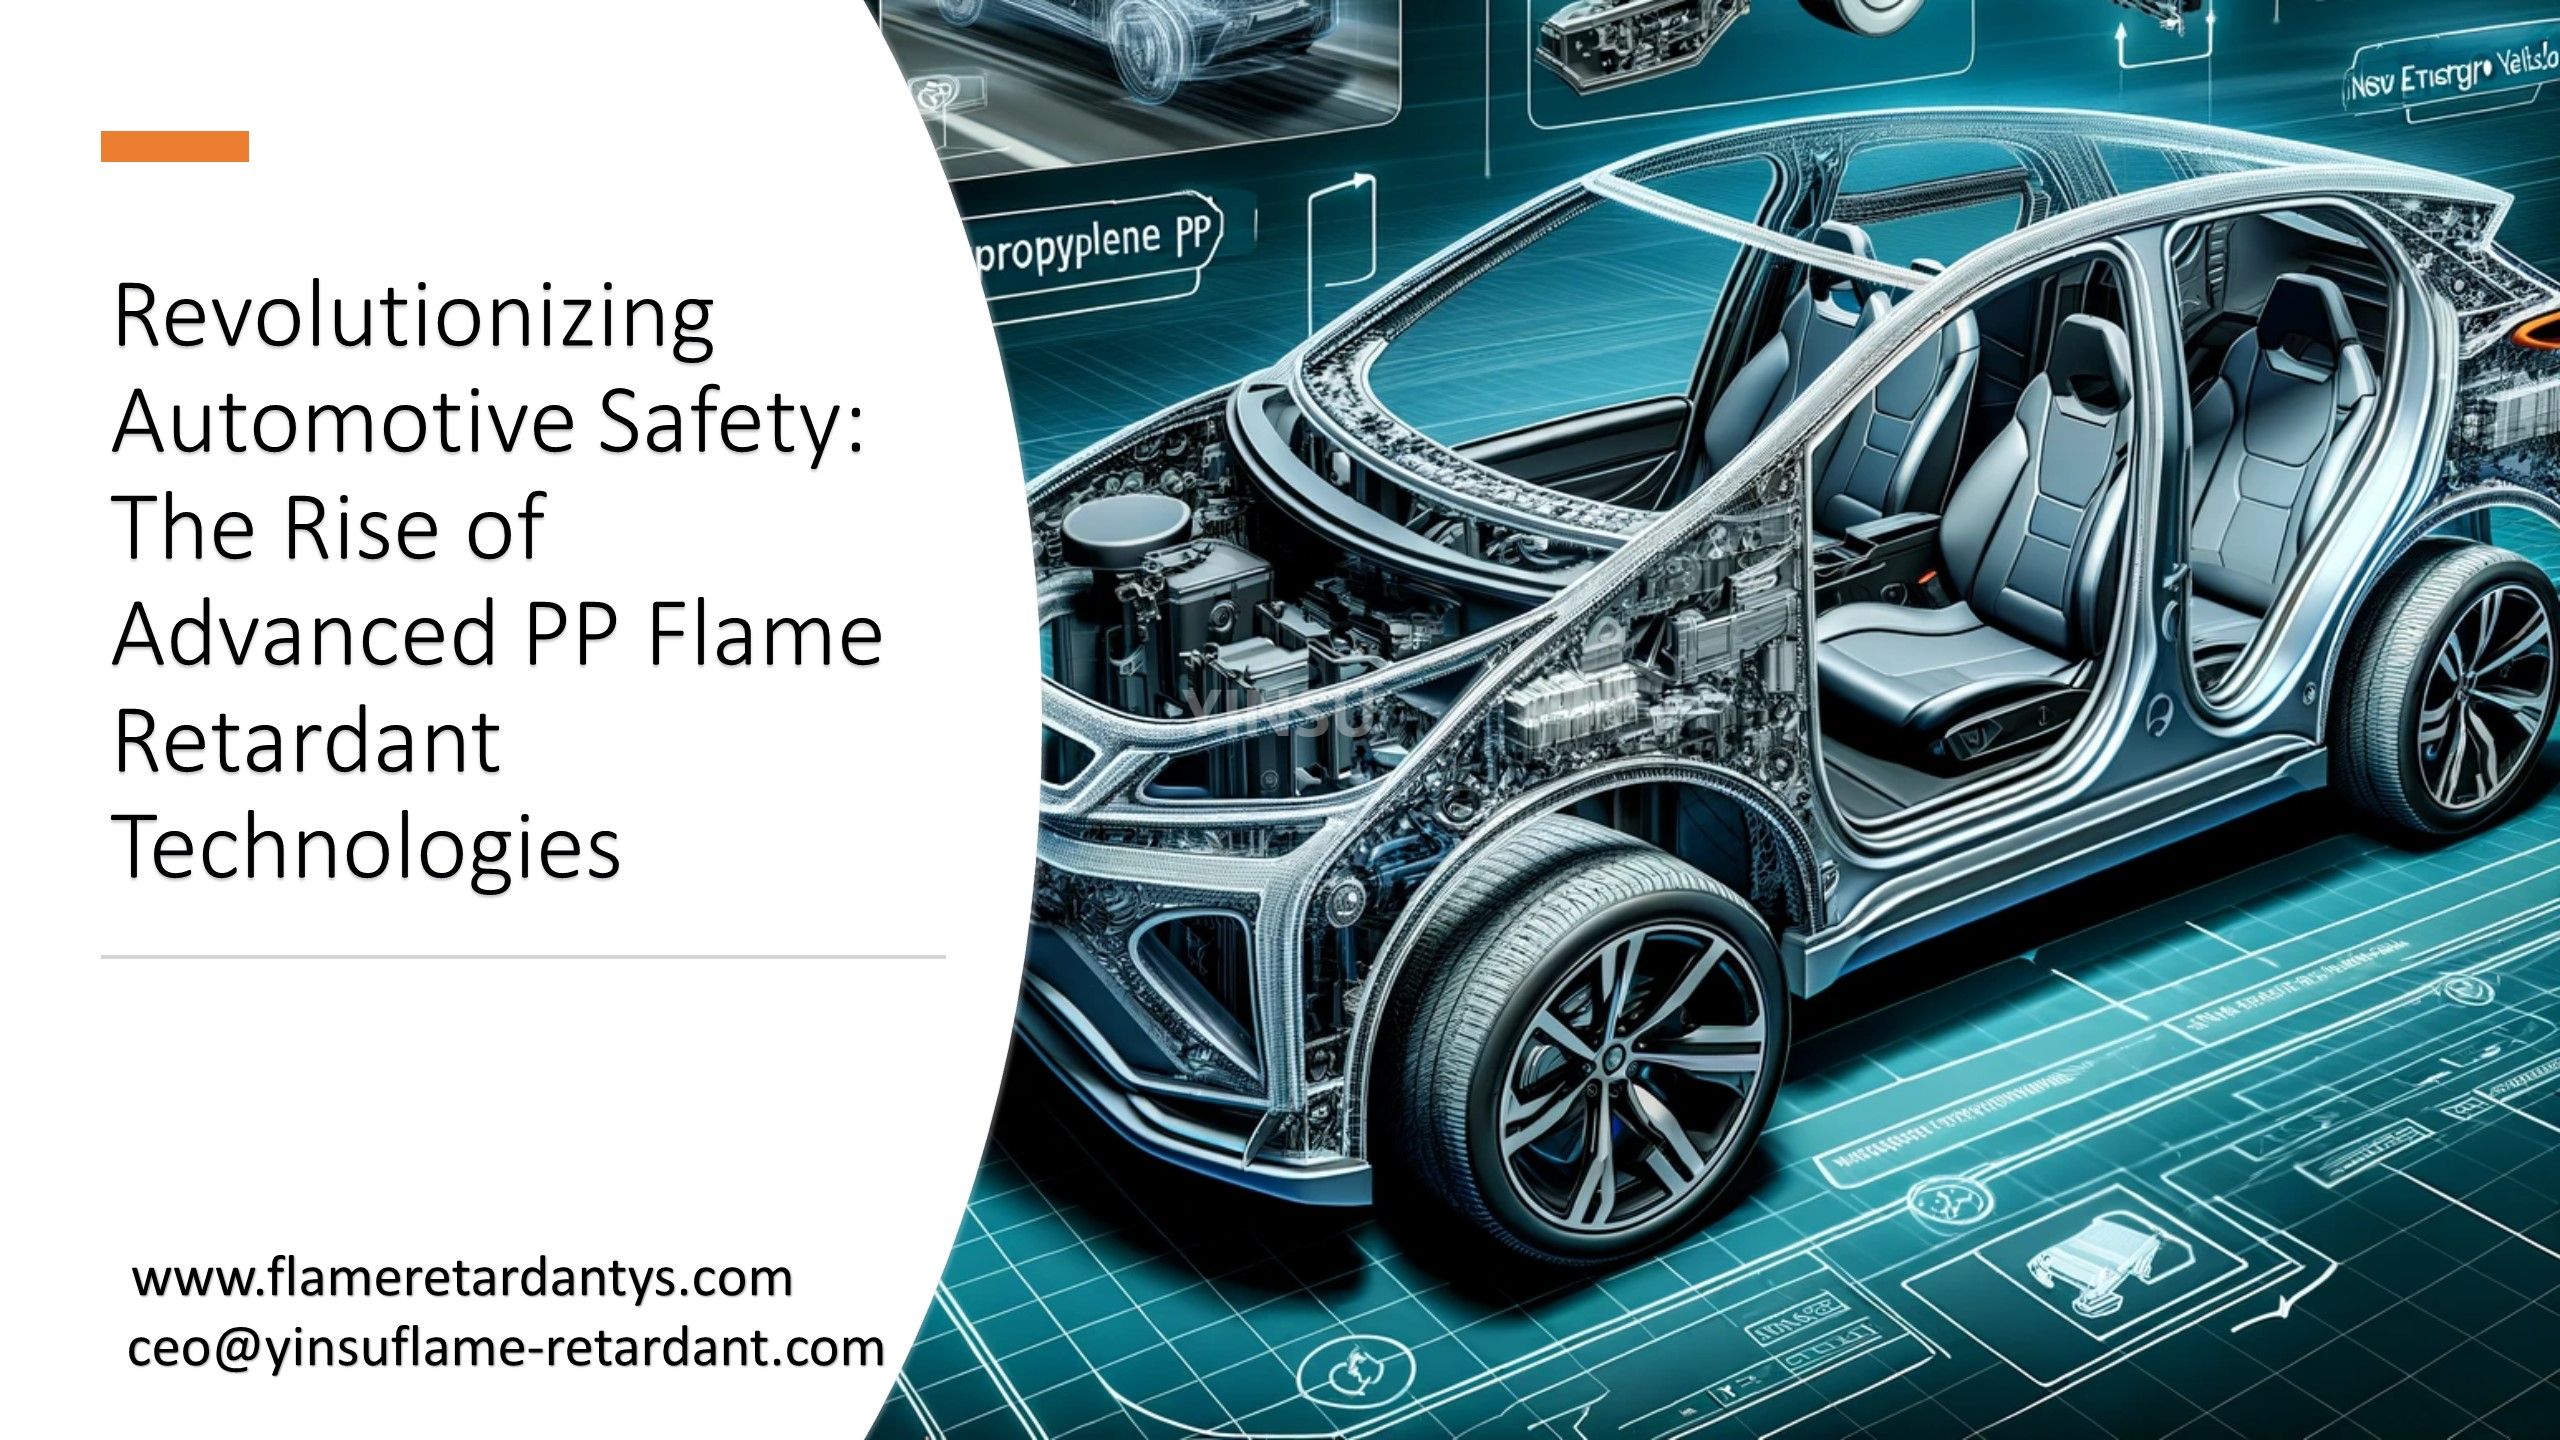 Revolutionizing Automotive Safety: The Rise of Advanced PP Flame Retardant Technologies